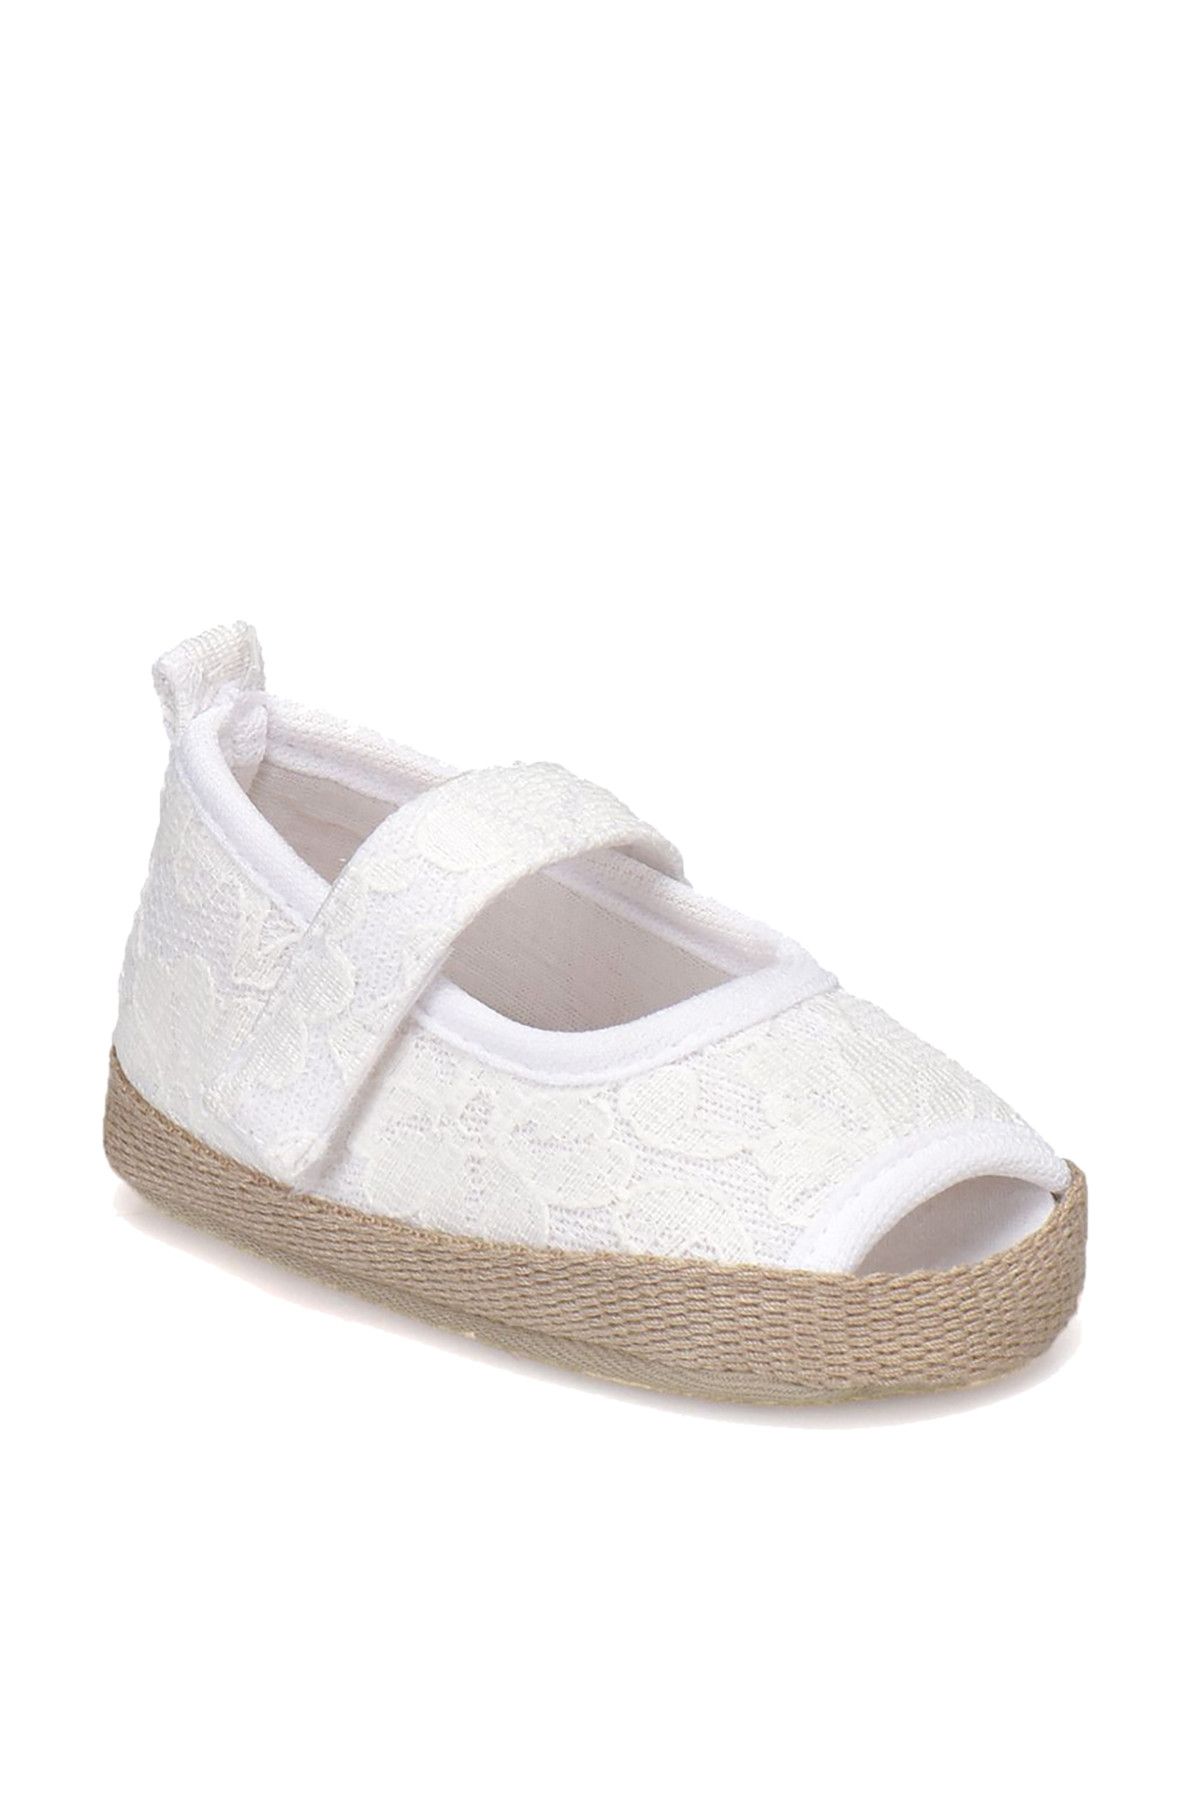 Kinetix SISI Beyaz Kız Bebek Sandalet 100310182